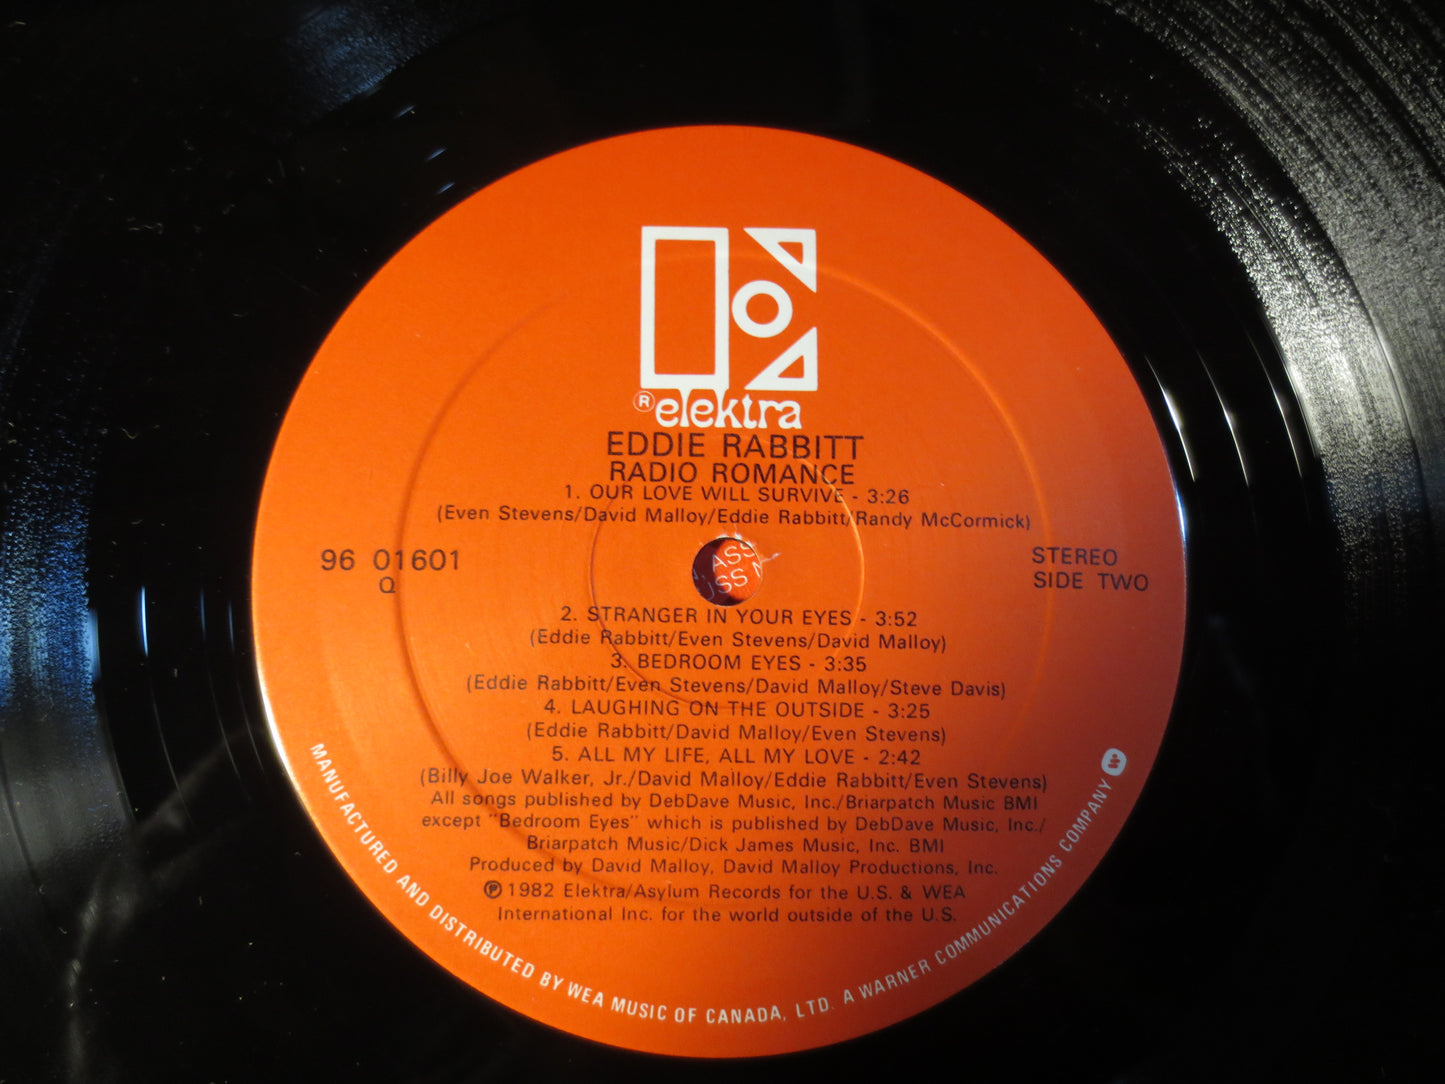 EDDIE RABBITT, Radio ROMANCE, Eddie Rabbitt Album, Eddie Rabbitt Vinyl, Country Records, Vintage Vinyl, 1982 Records